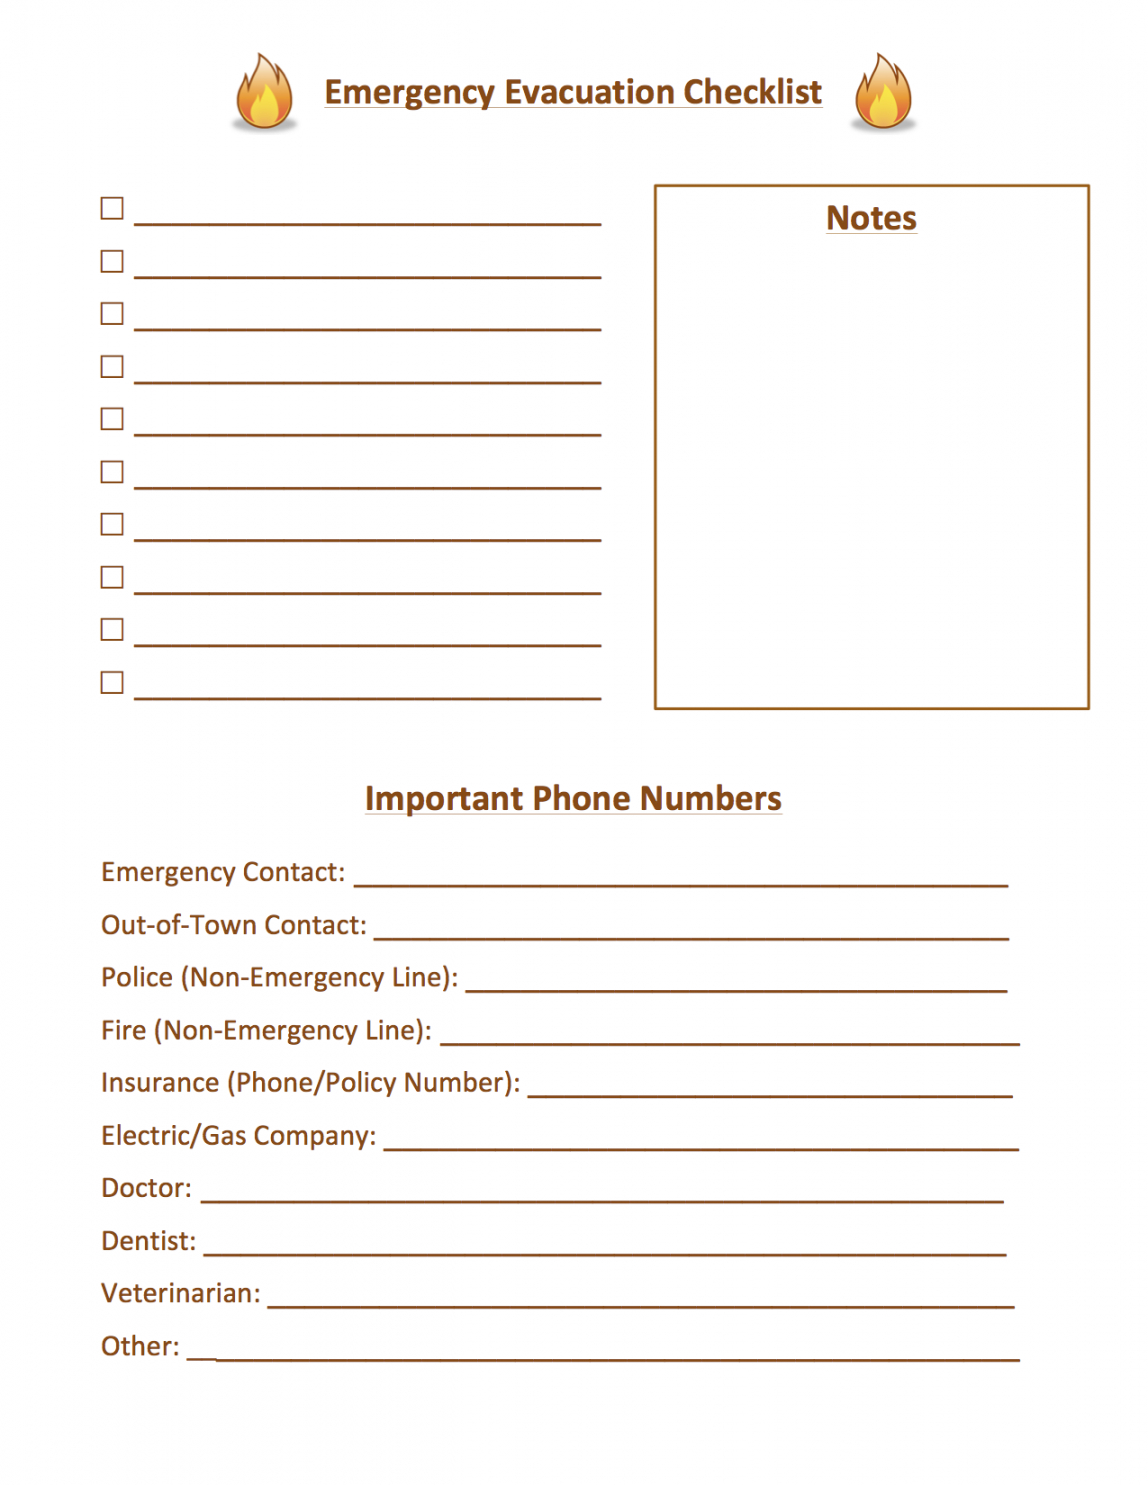 printable emergency evacuation checklist template samples hmh designs fire evacuation checklist template pdf